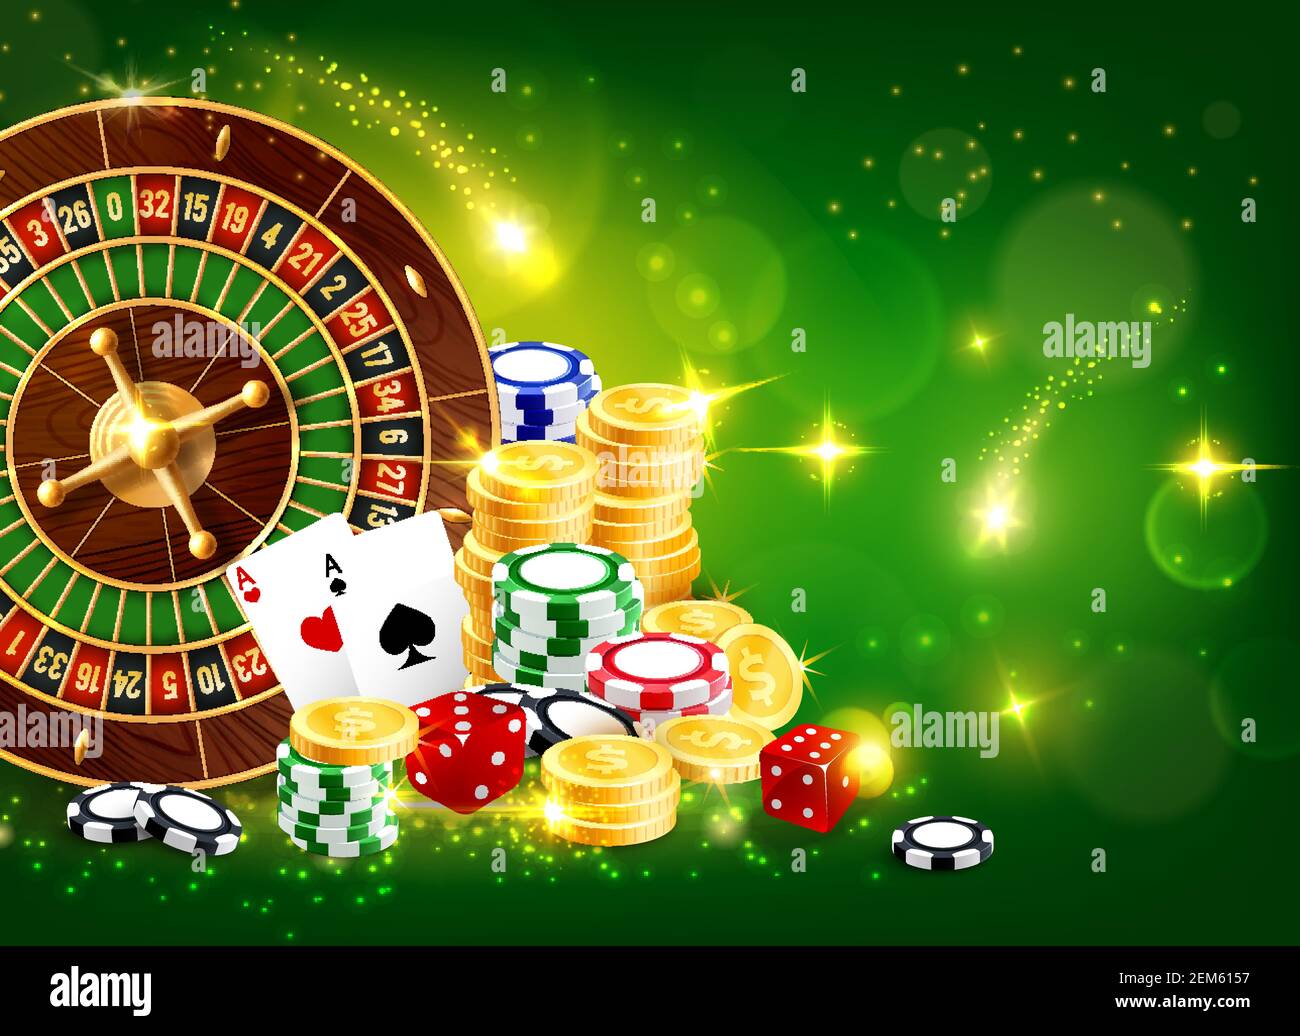 Premium Photo  Poker casino online coin cash machine play now vector